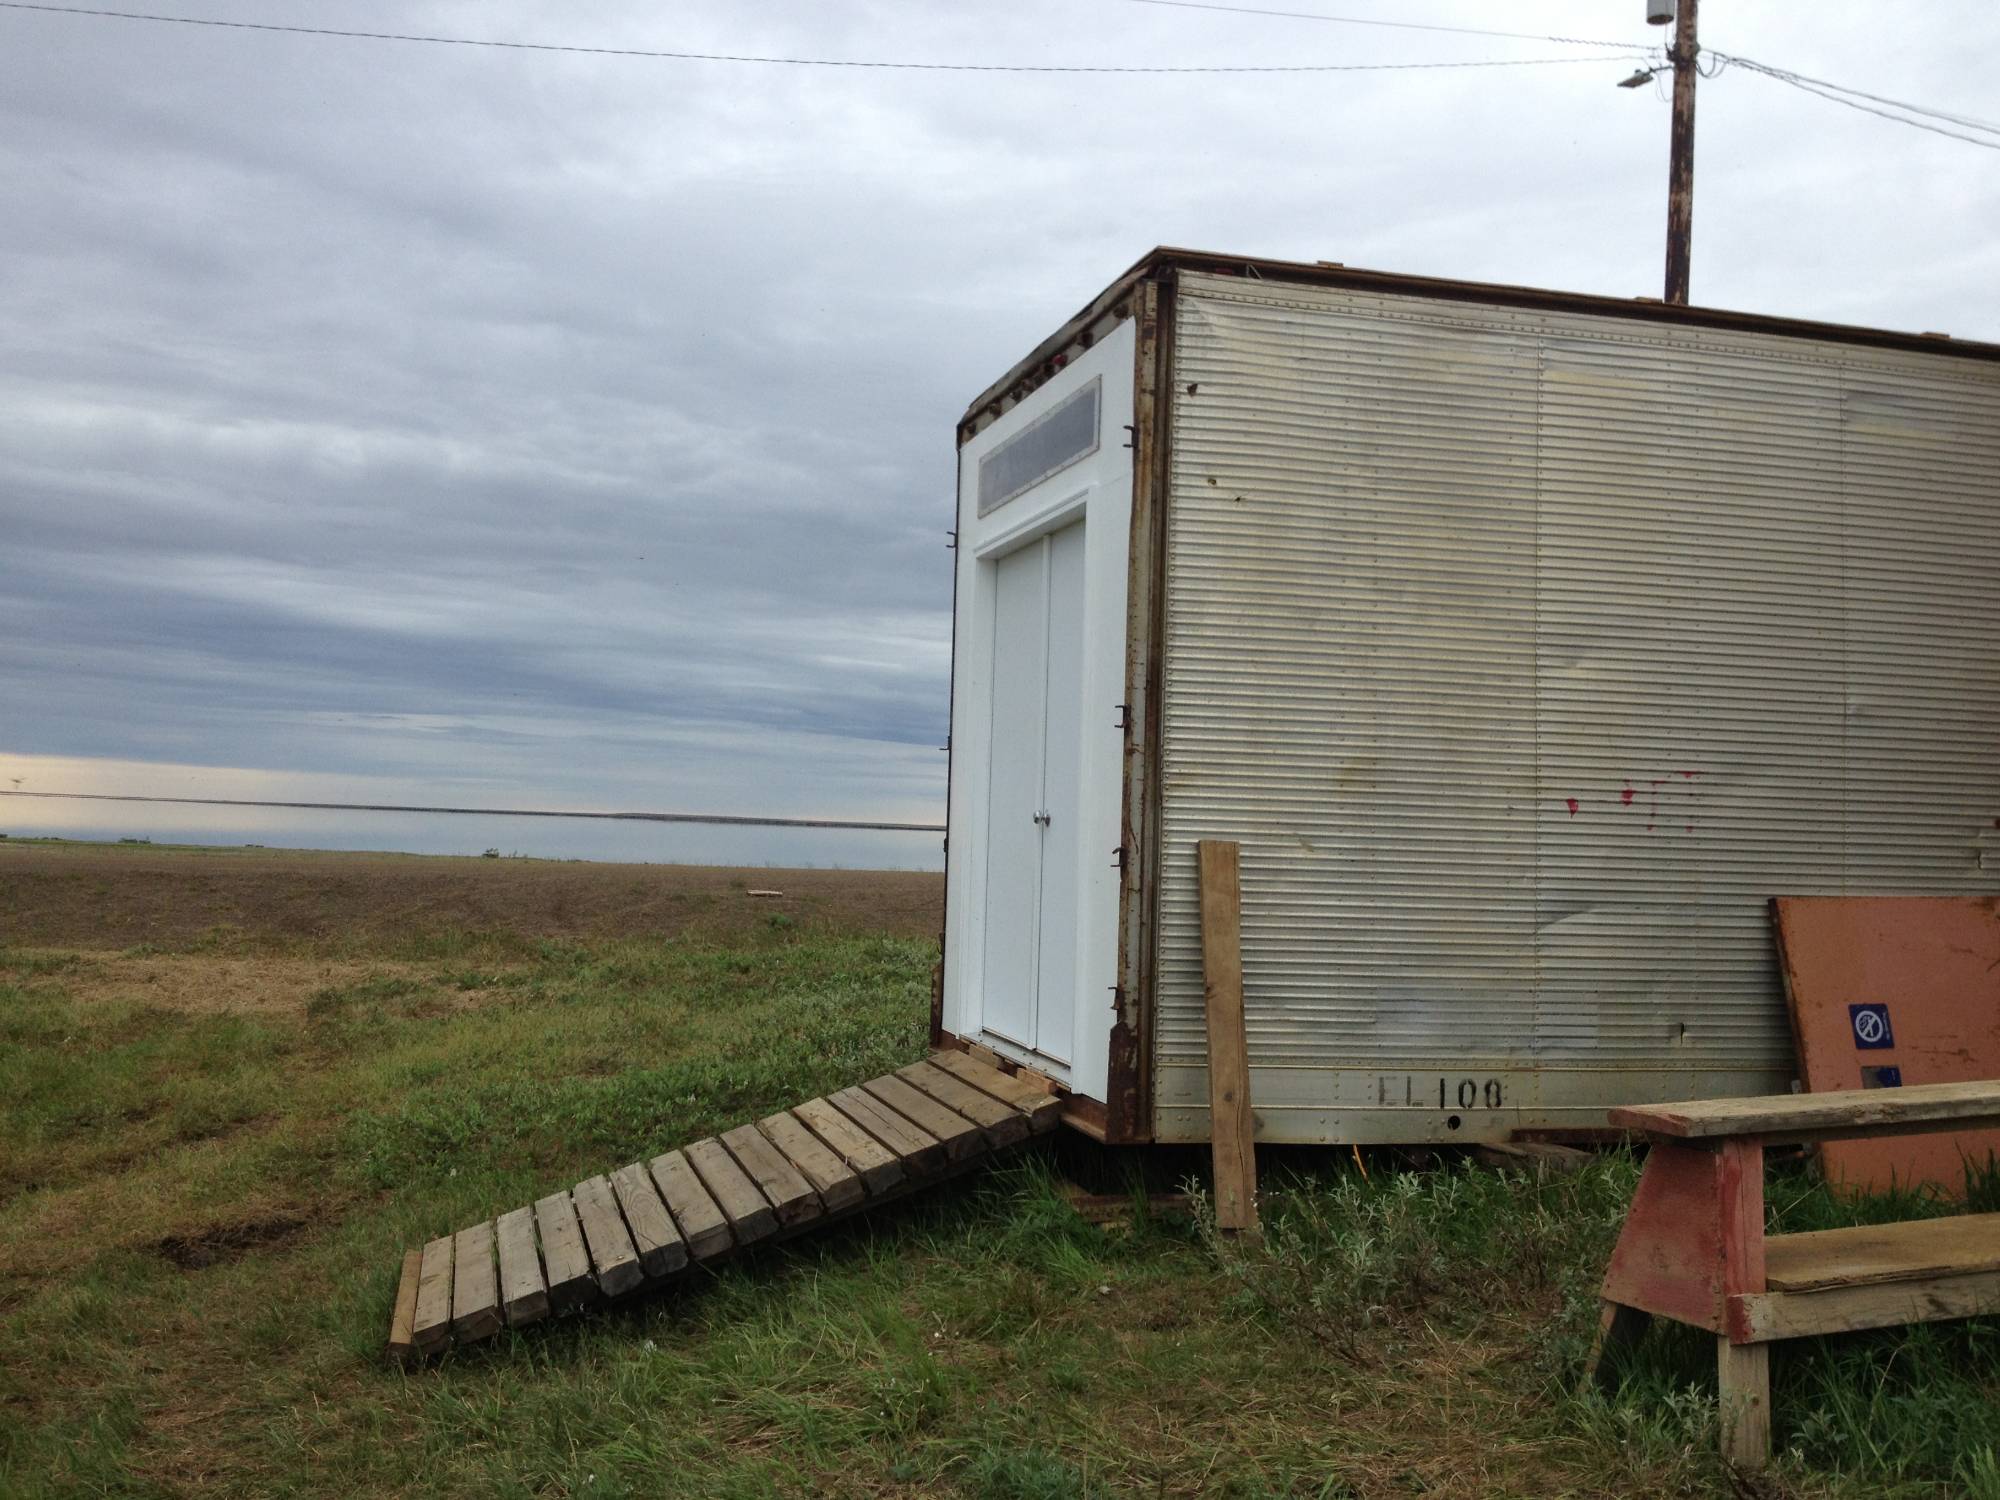 Photo of storage shed at Atqasuk.